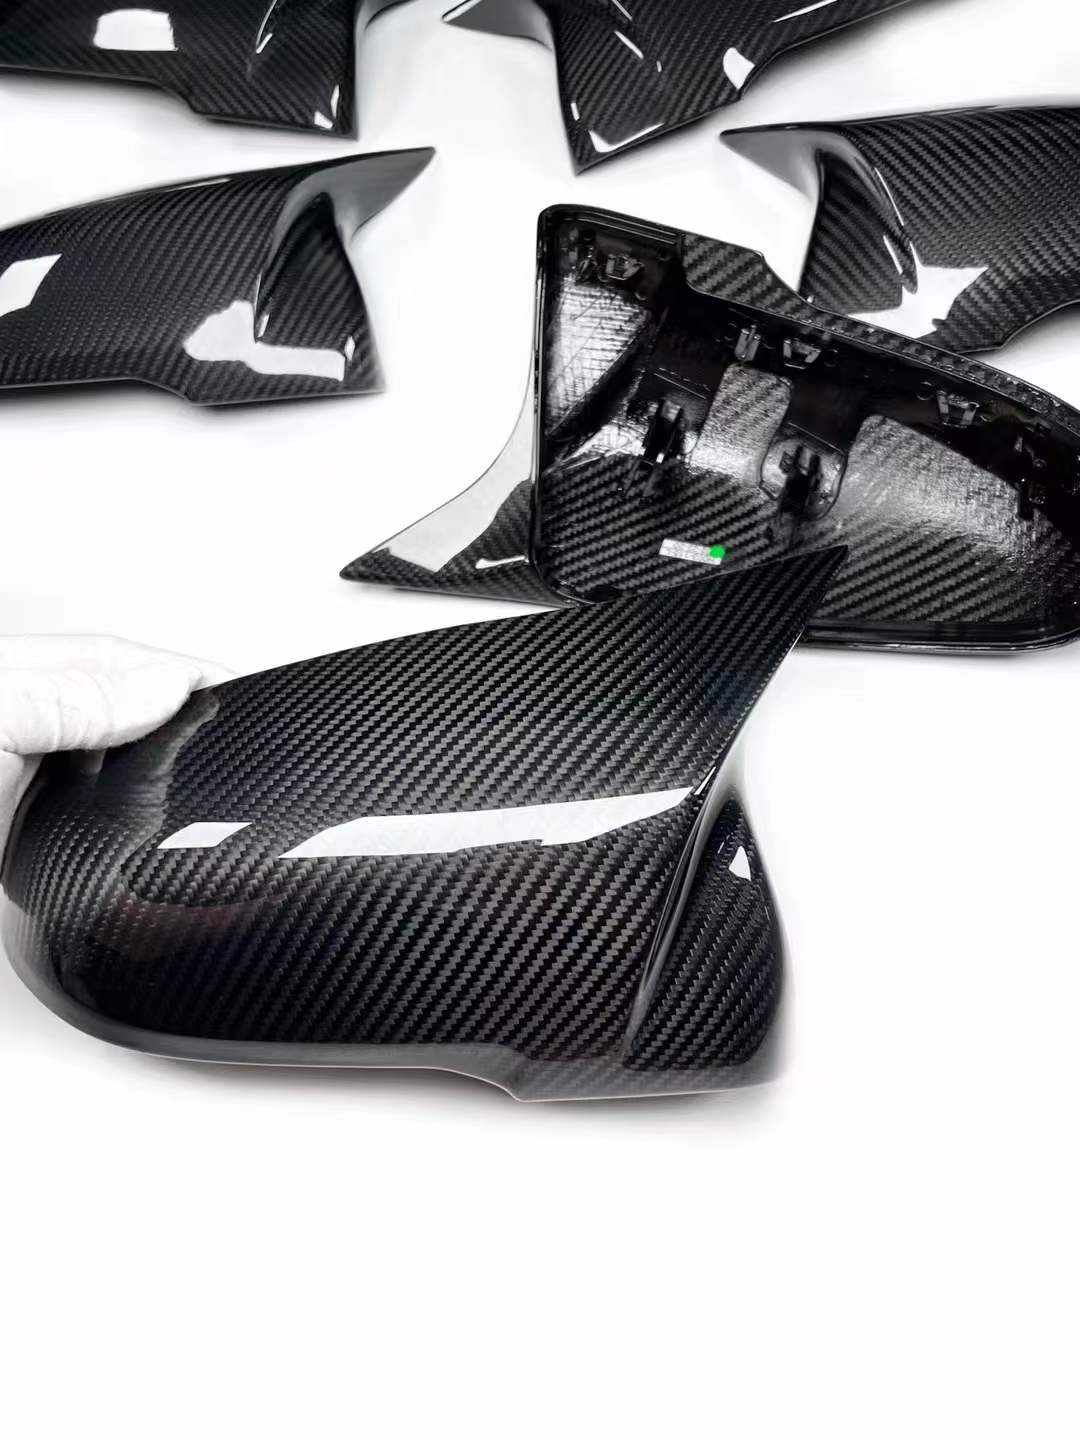 Carbon Fiber Mirror Caps For BMW F Series